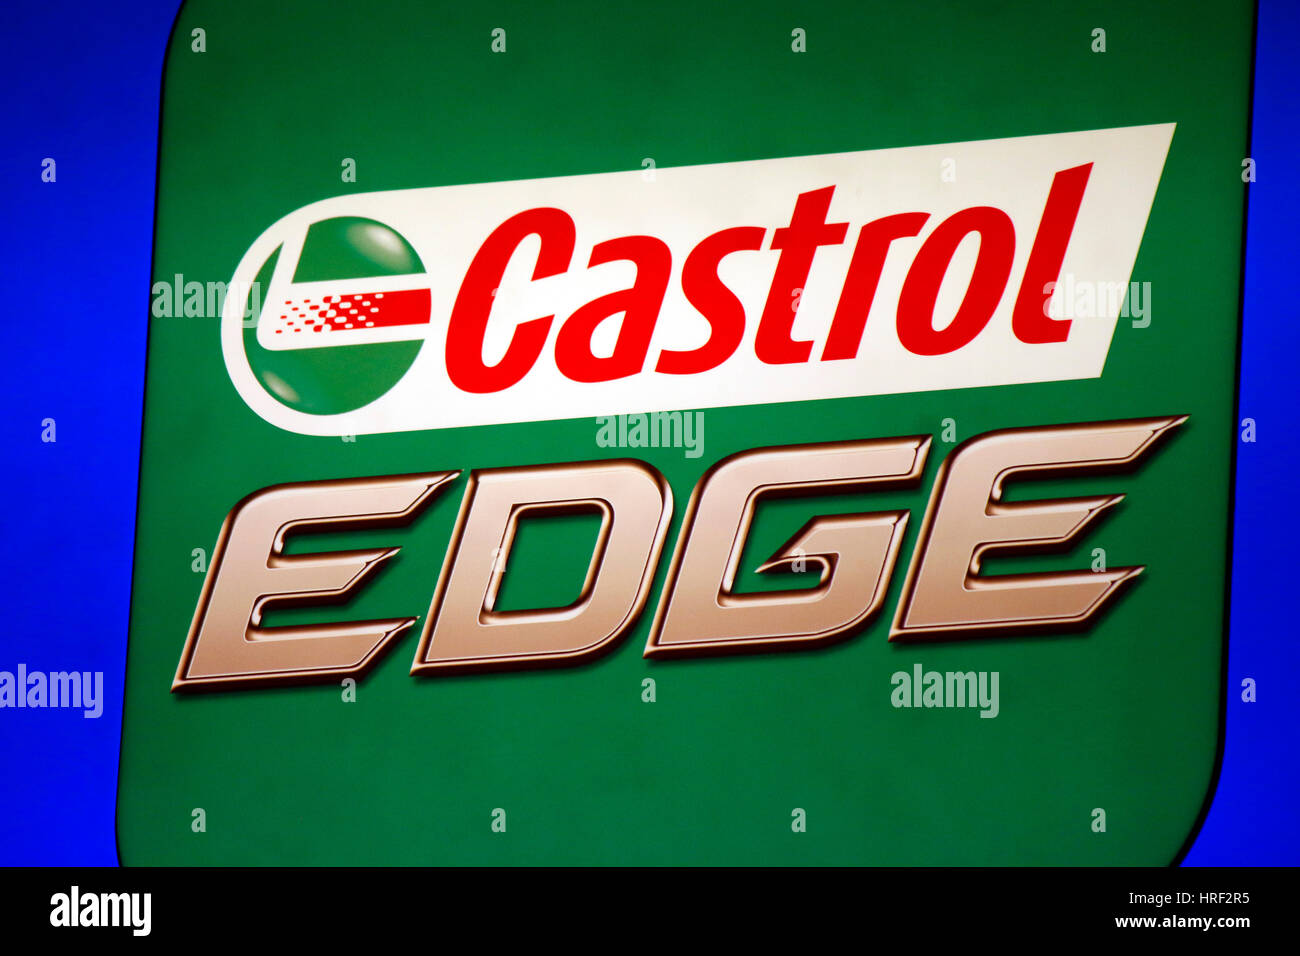 das Logo der Marke/ the logo of the brand 'Castrol Edge', Berlin. Stock Photo